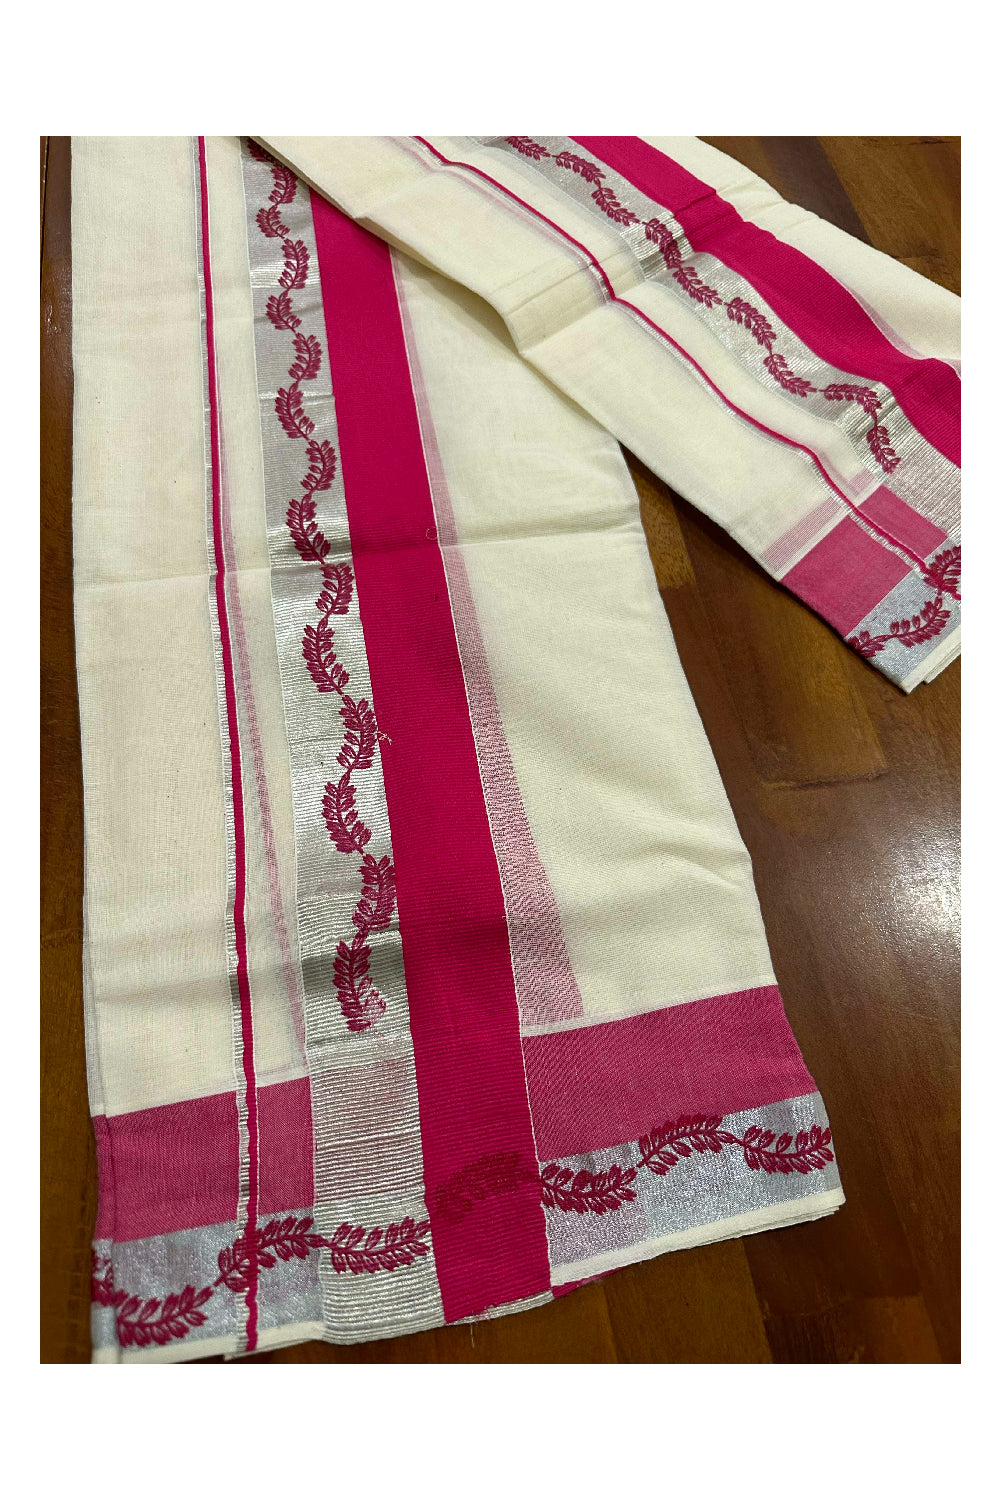 Kerala Cotton Single Set Mundu (Mundum Neriyathum) with Bright Magenta Block Prints and Silver Kasavu Border 2.80 Mtrs